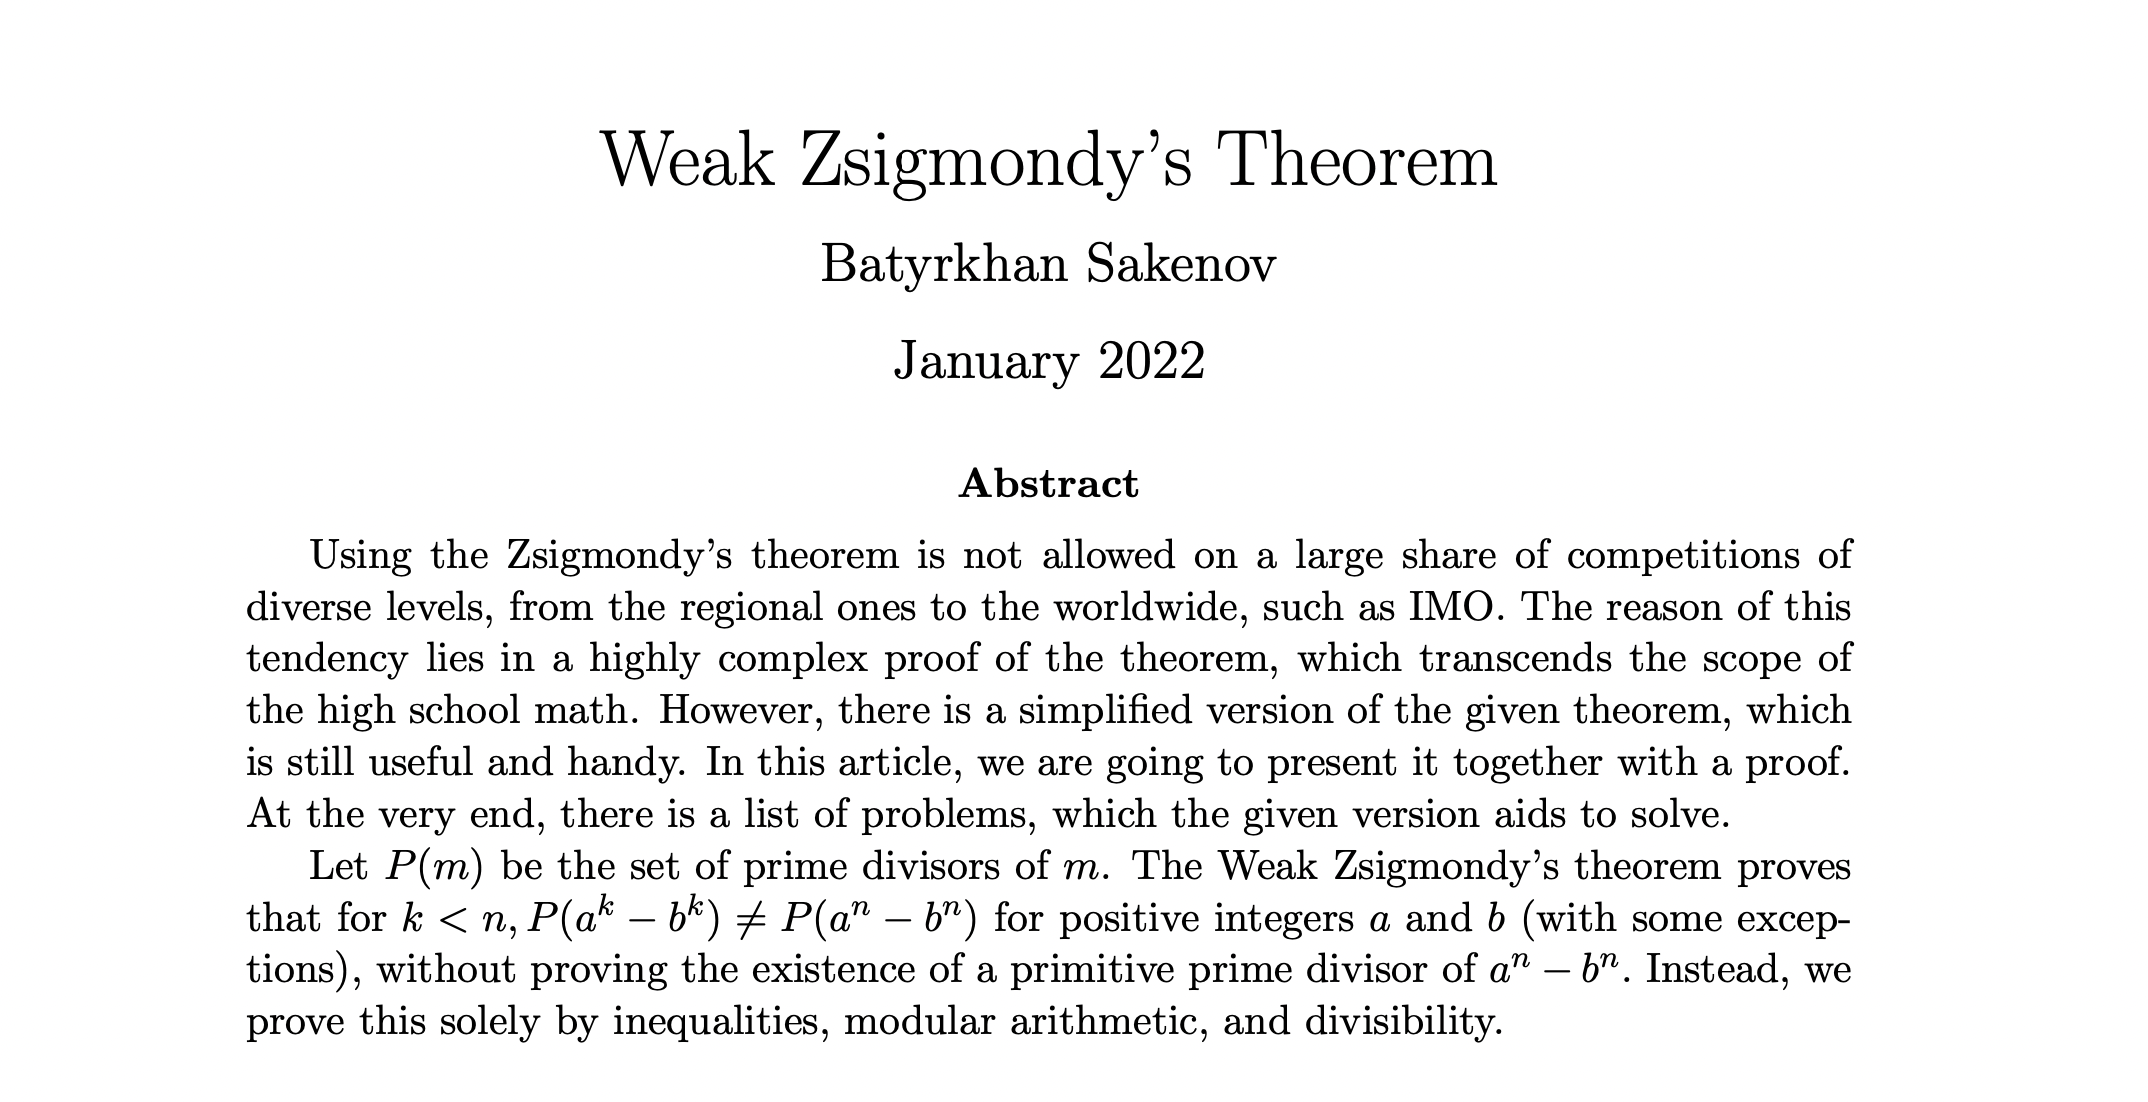 Слабая теорема Зигмонди